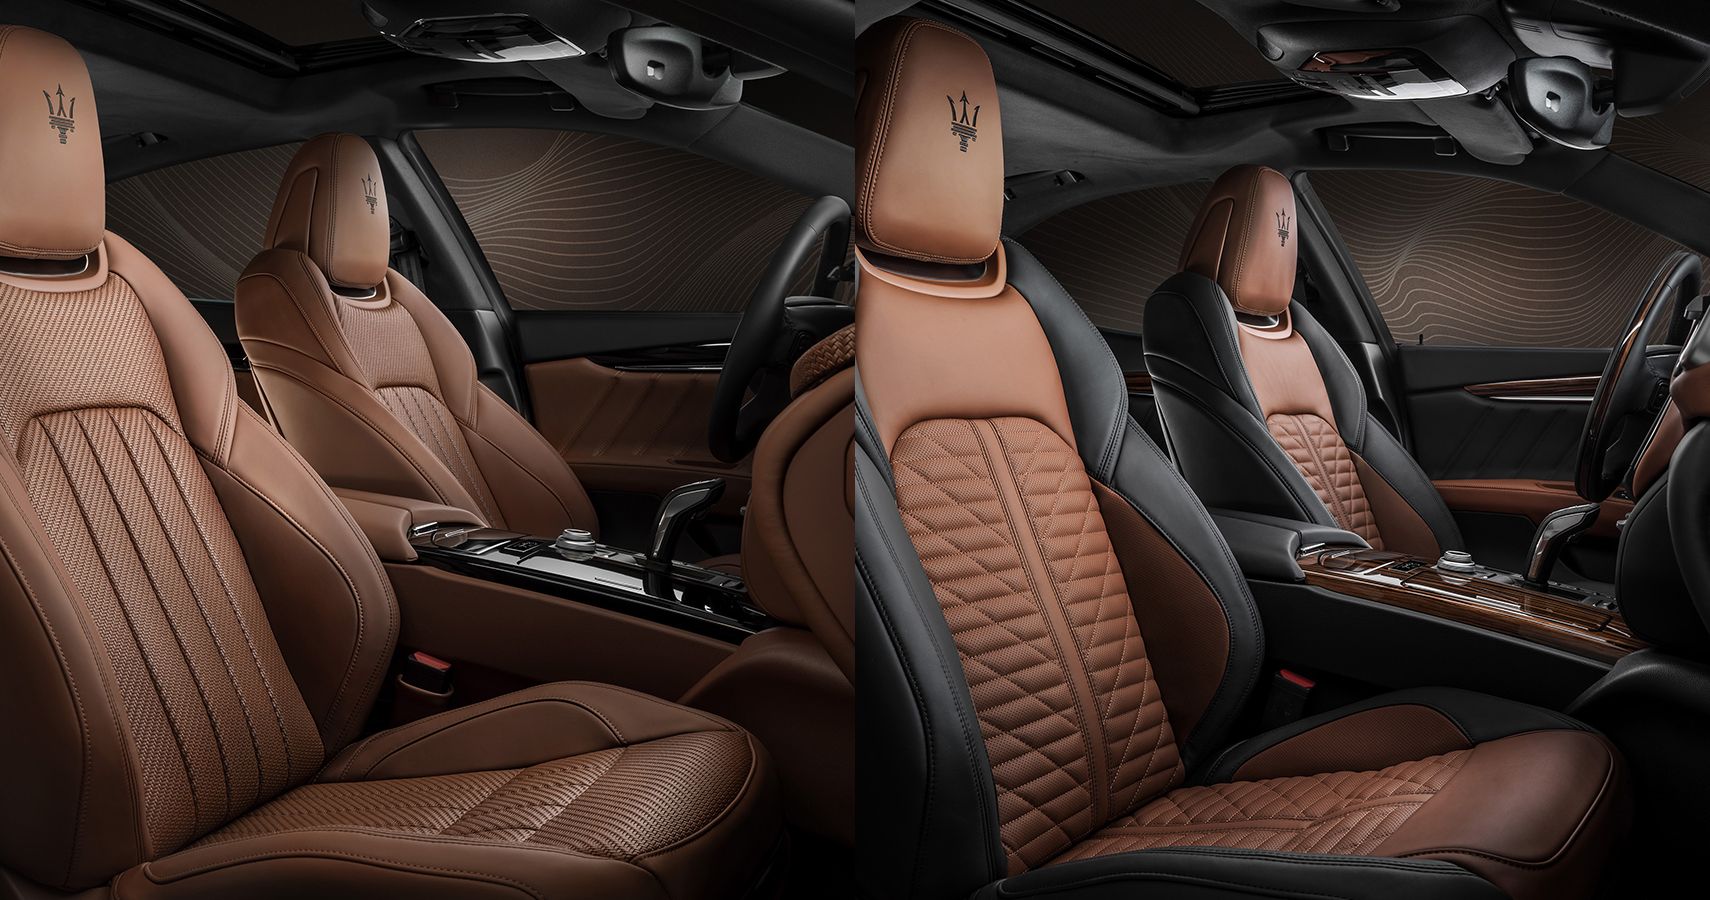 Maserati Royale leather interior